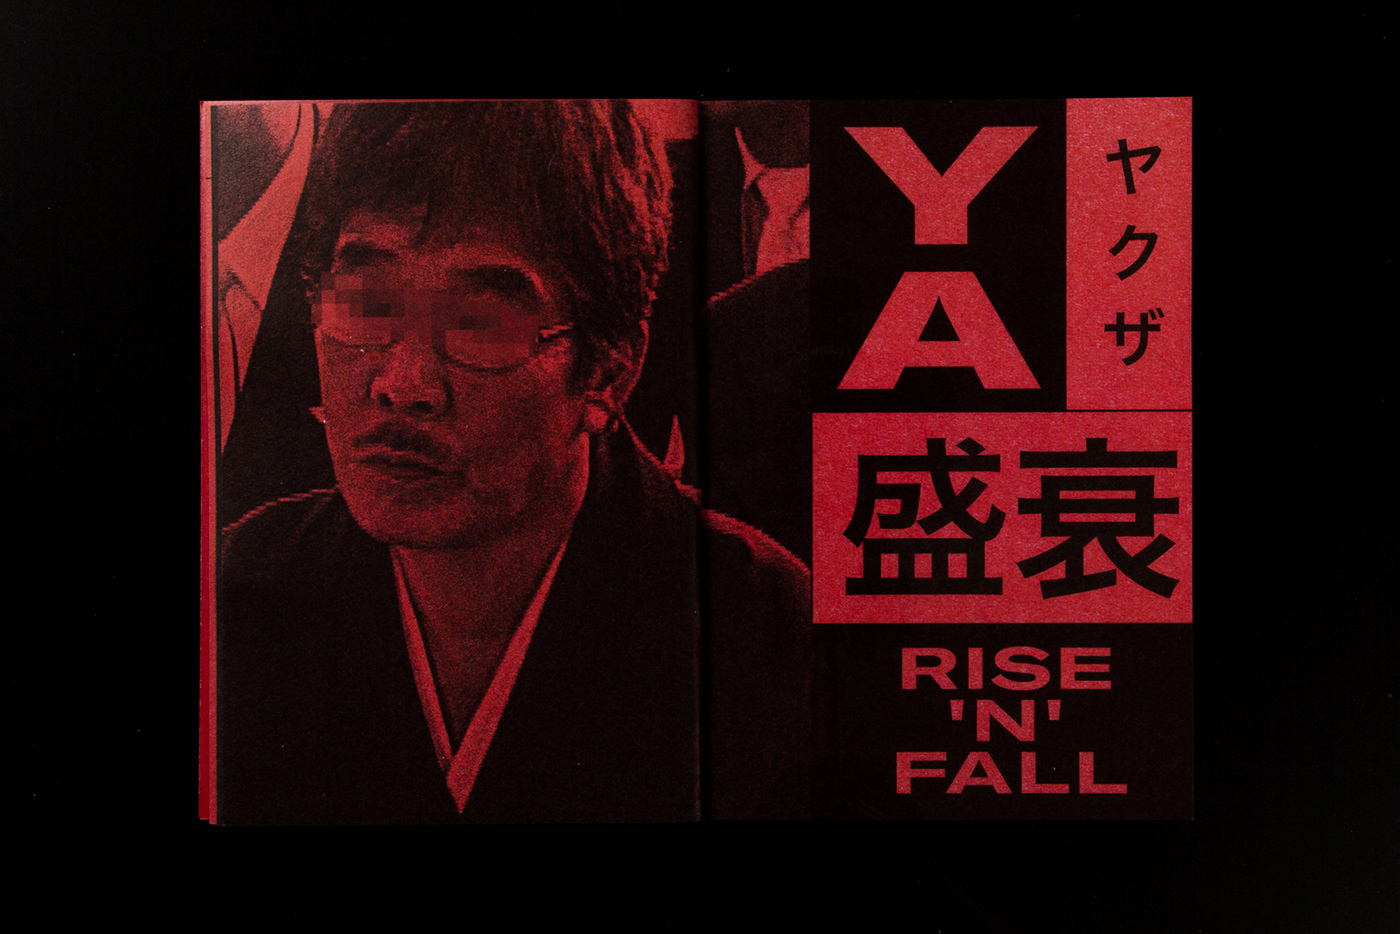 yakuza mafia japan book good for nothing violence good and bad